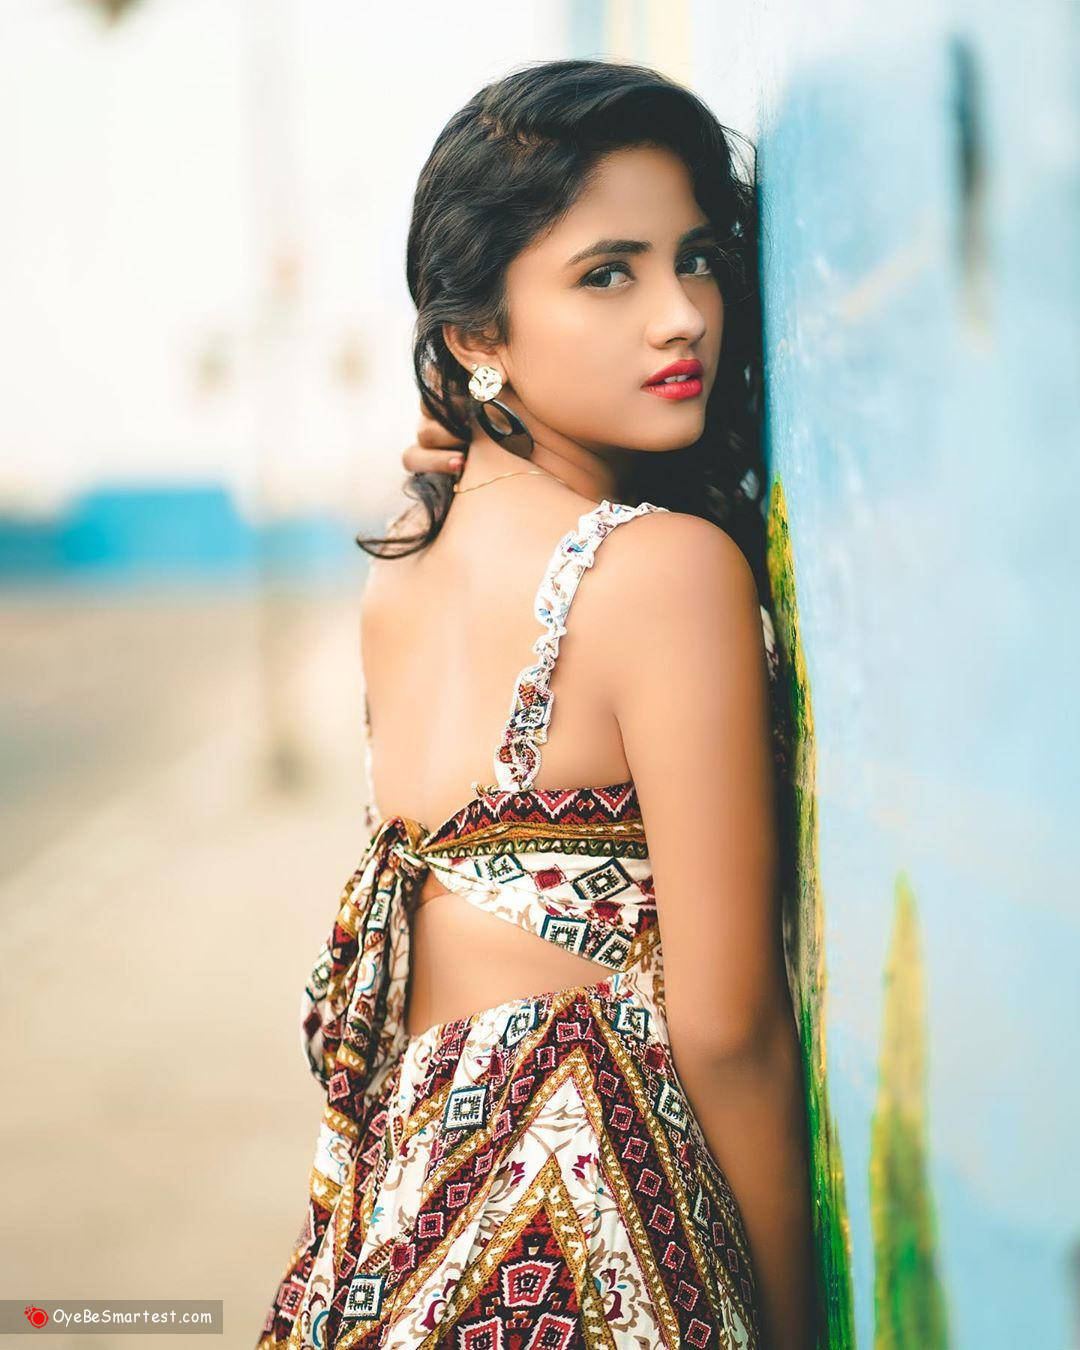 Nisha Guragain Wearing Backless Dress Wallpaper